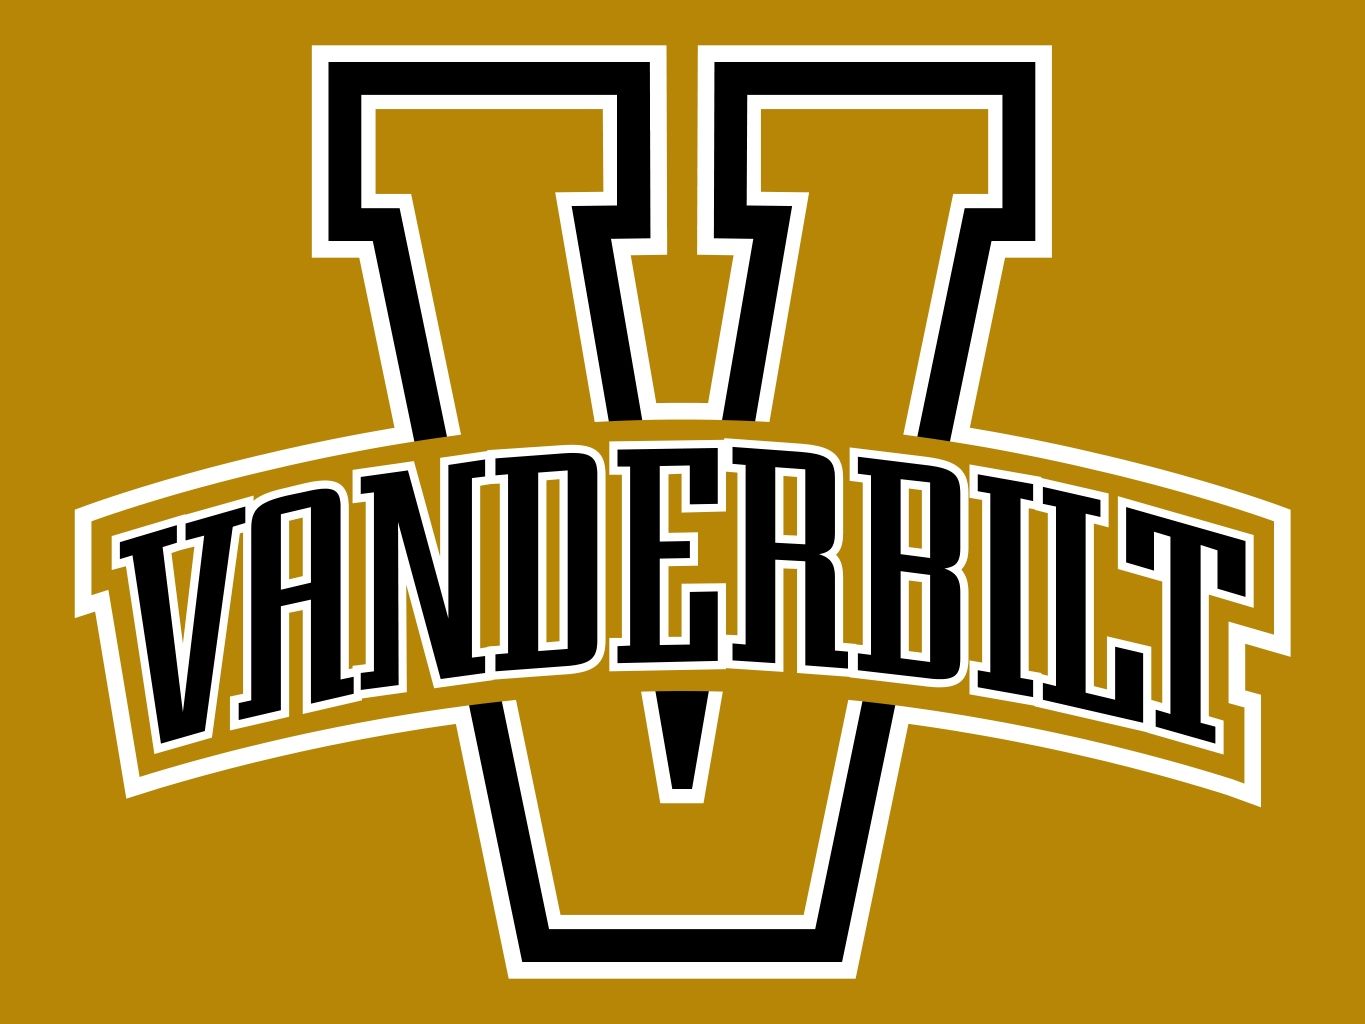 Vanderbilt University is a private research university located